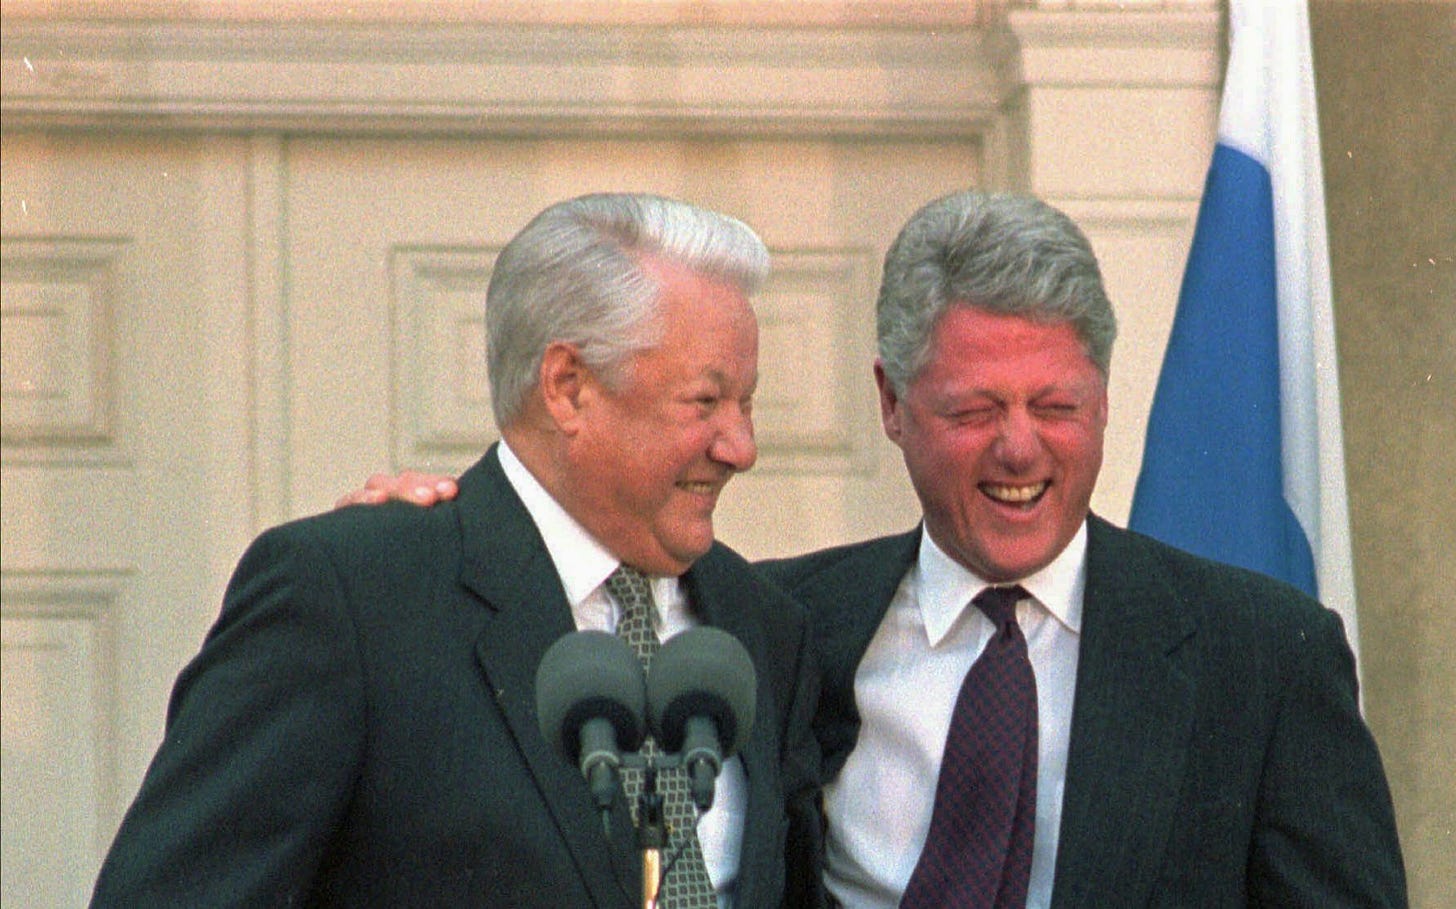 Boris Yeltsin suggested secret meeting on submarine with Bill Clinton,  transcripts reveal